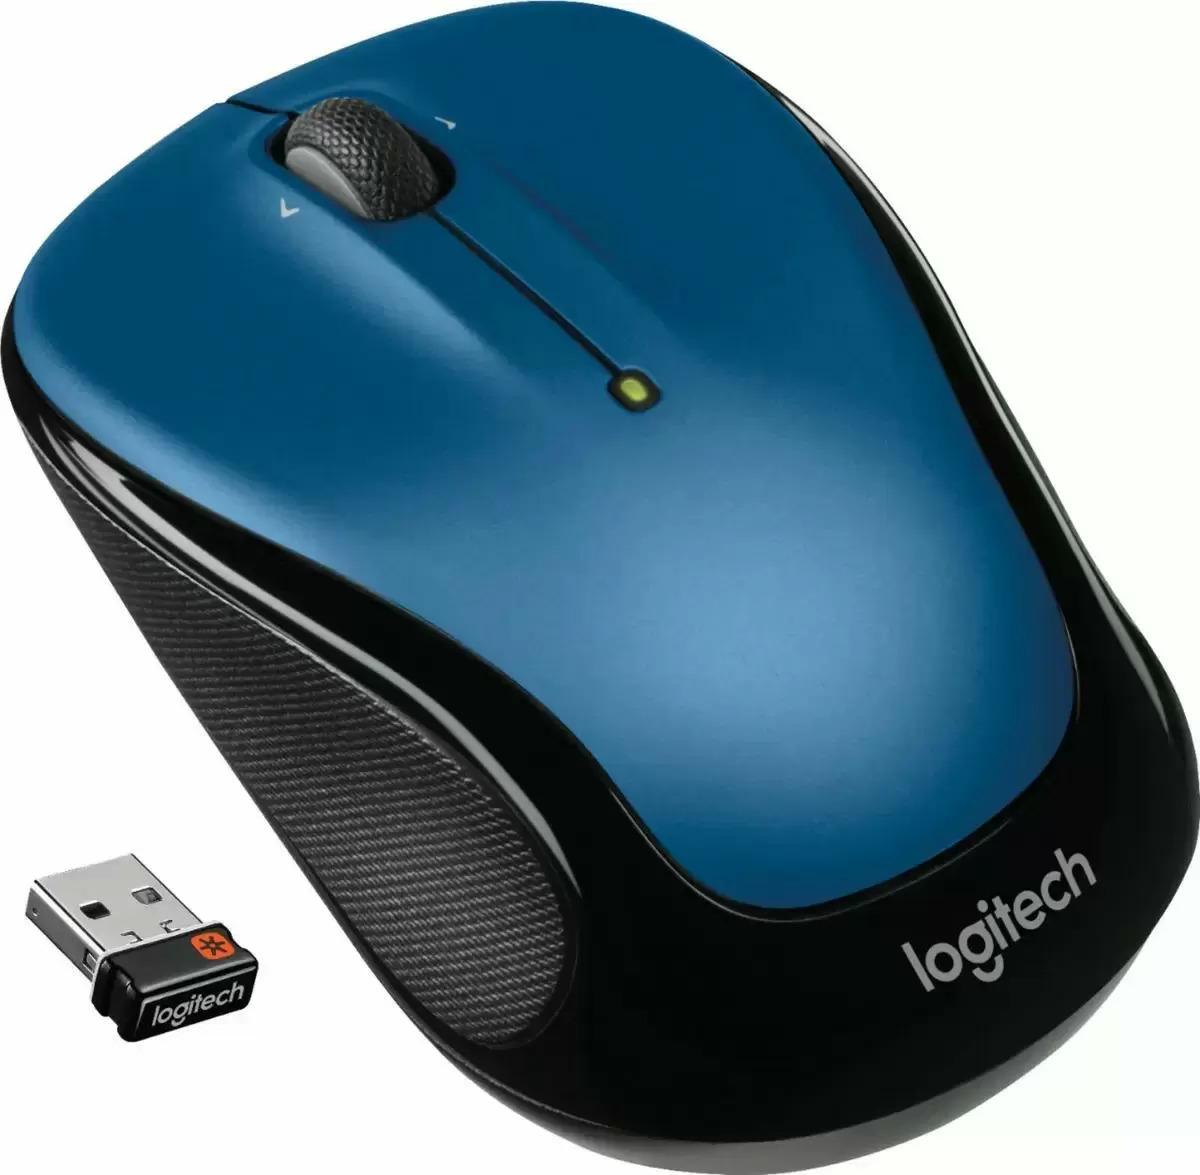 Logitech M325 Wireless Optical Ambidextrous Mouse for $9.99 Shipped